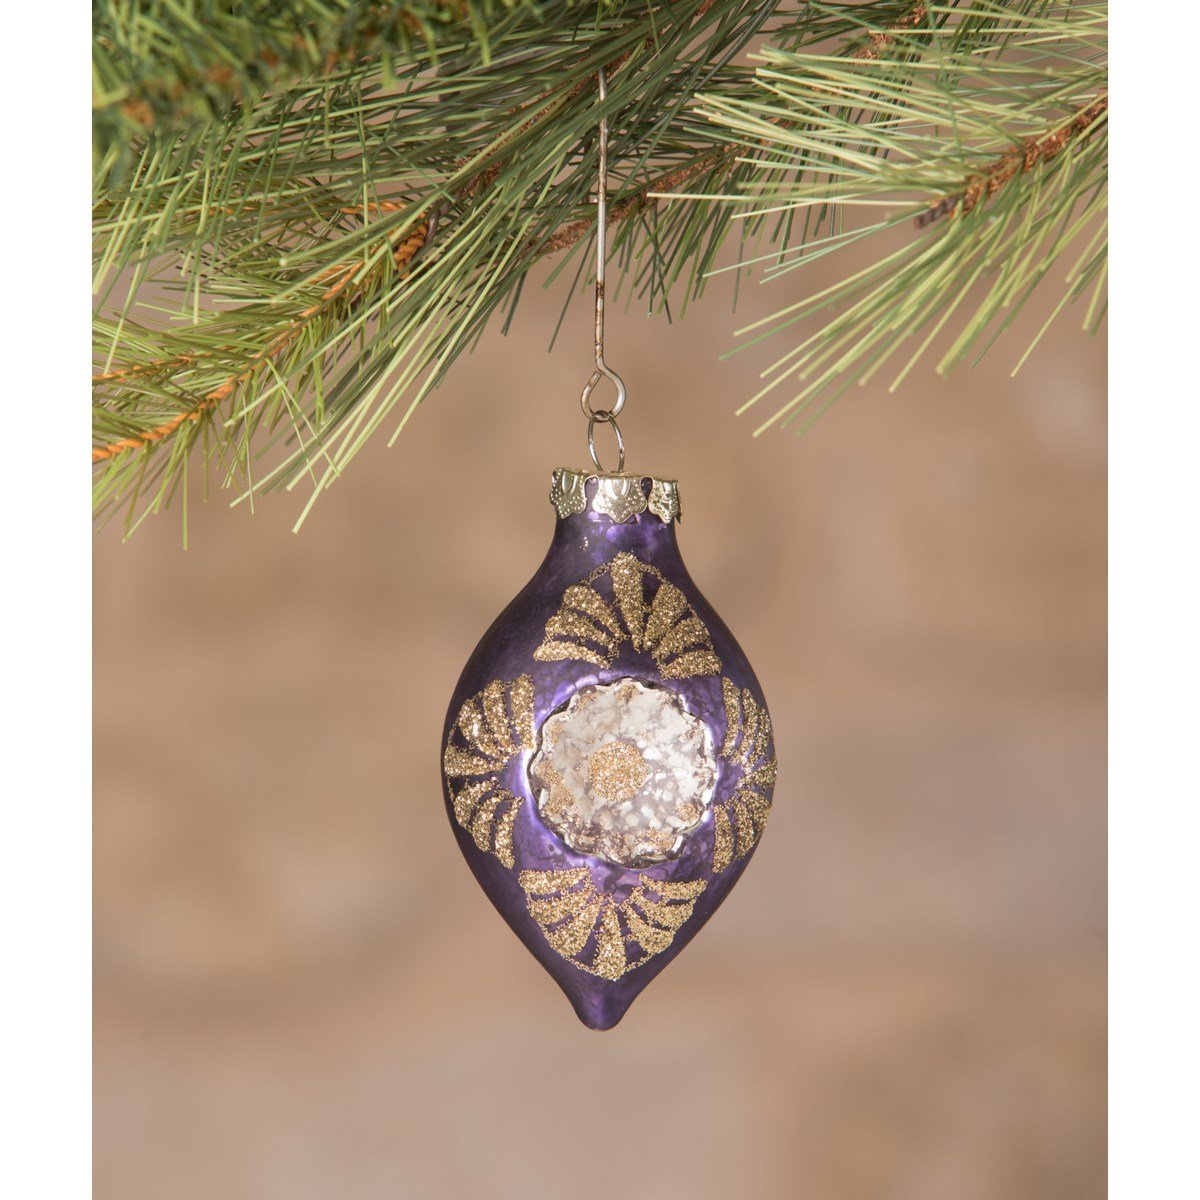 Jewel-Tide Onion Indent Ornament - Royalties